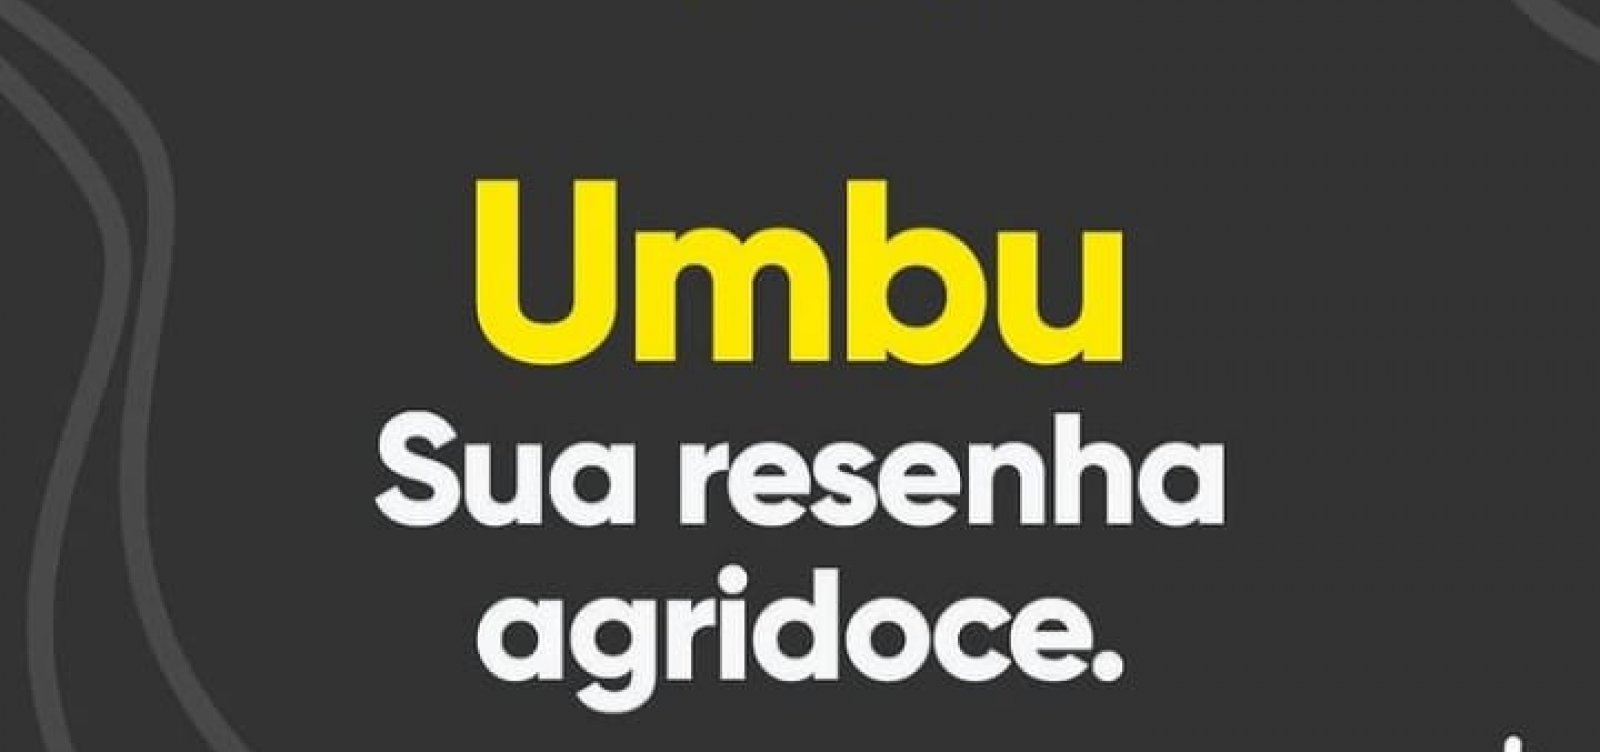 Rádio Metropole estreia programa Umbu na próxima sexta-feira; confira 